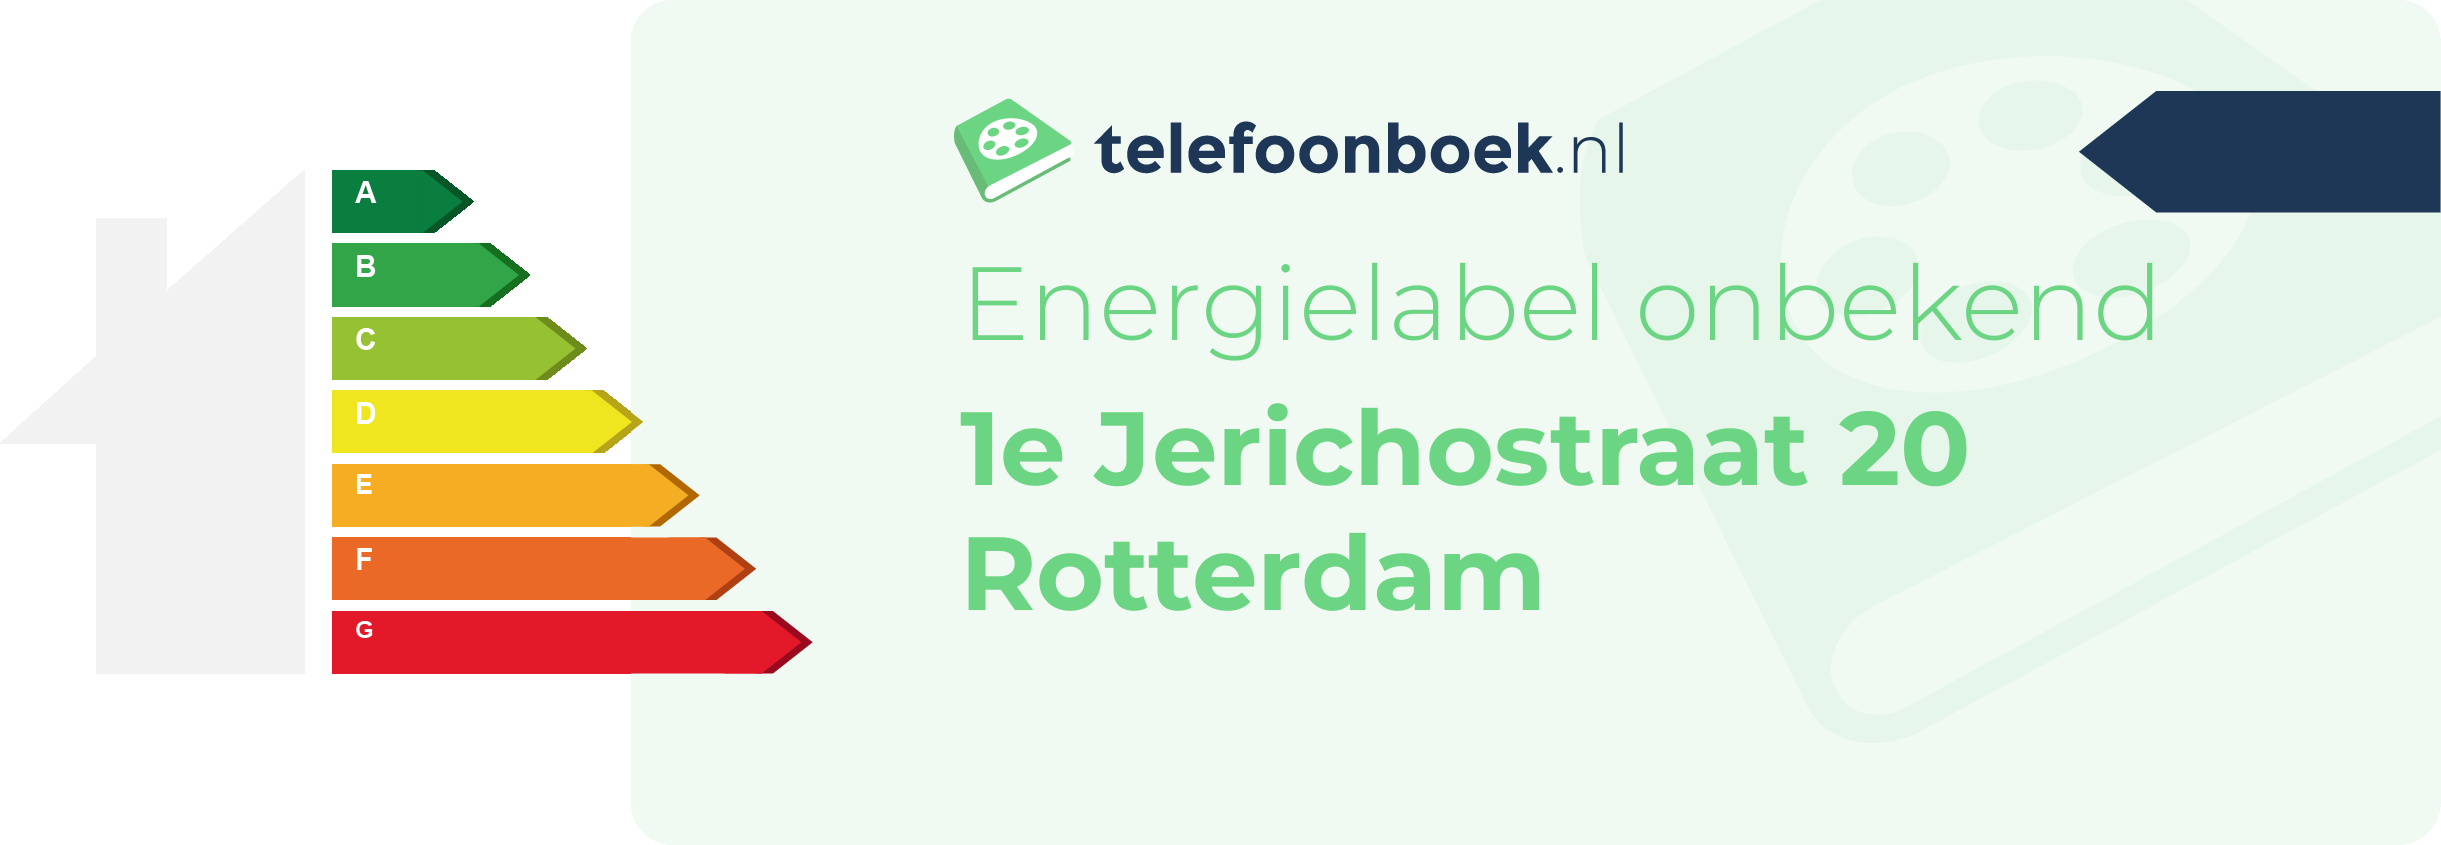 Energielabel 1e Jerichostraat 20 Rotterdam